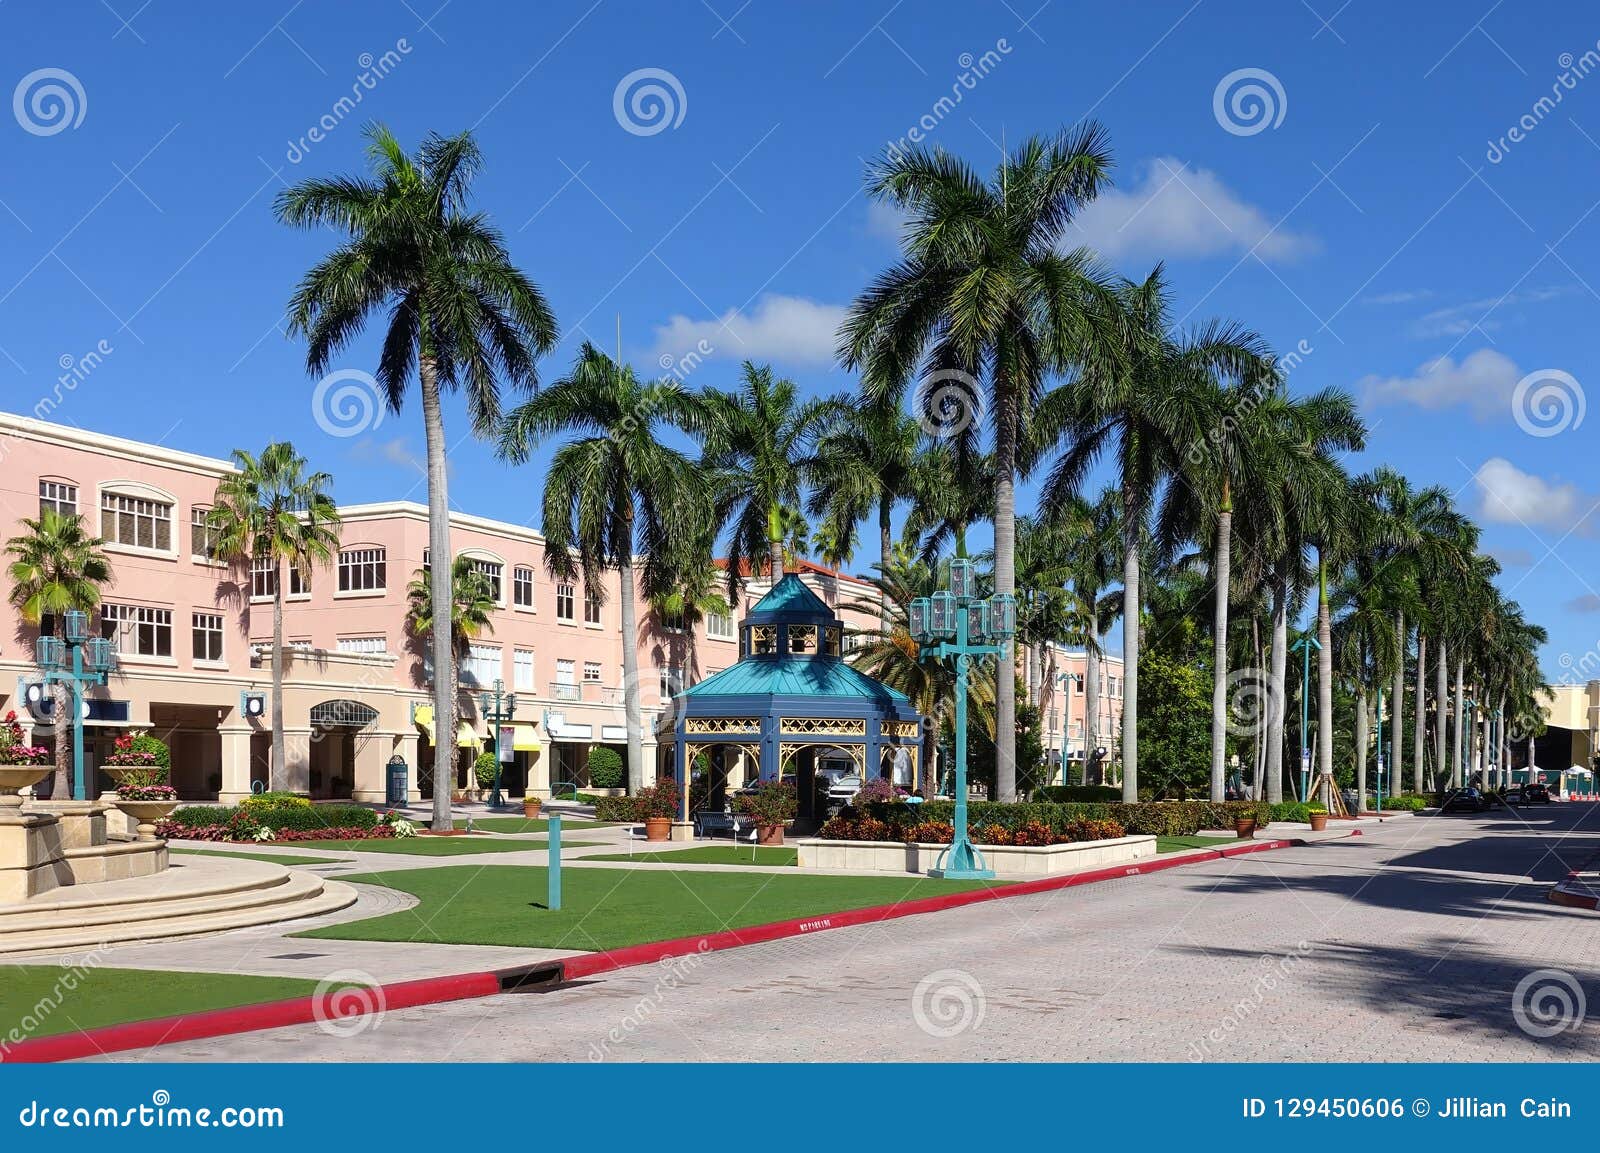 Town Center at Boca Raton - The Palm Beaches 